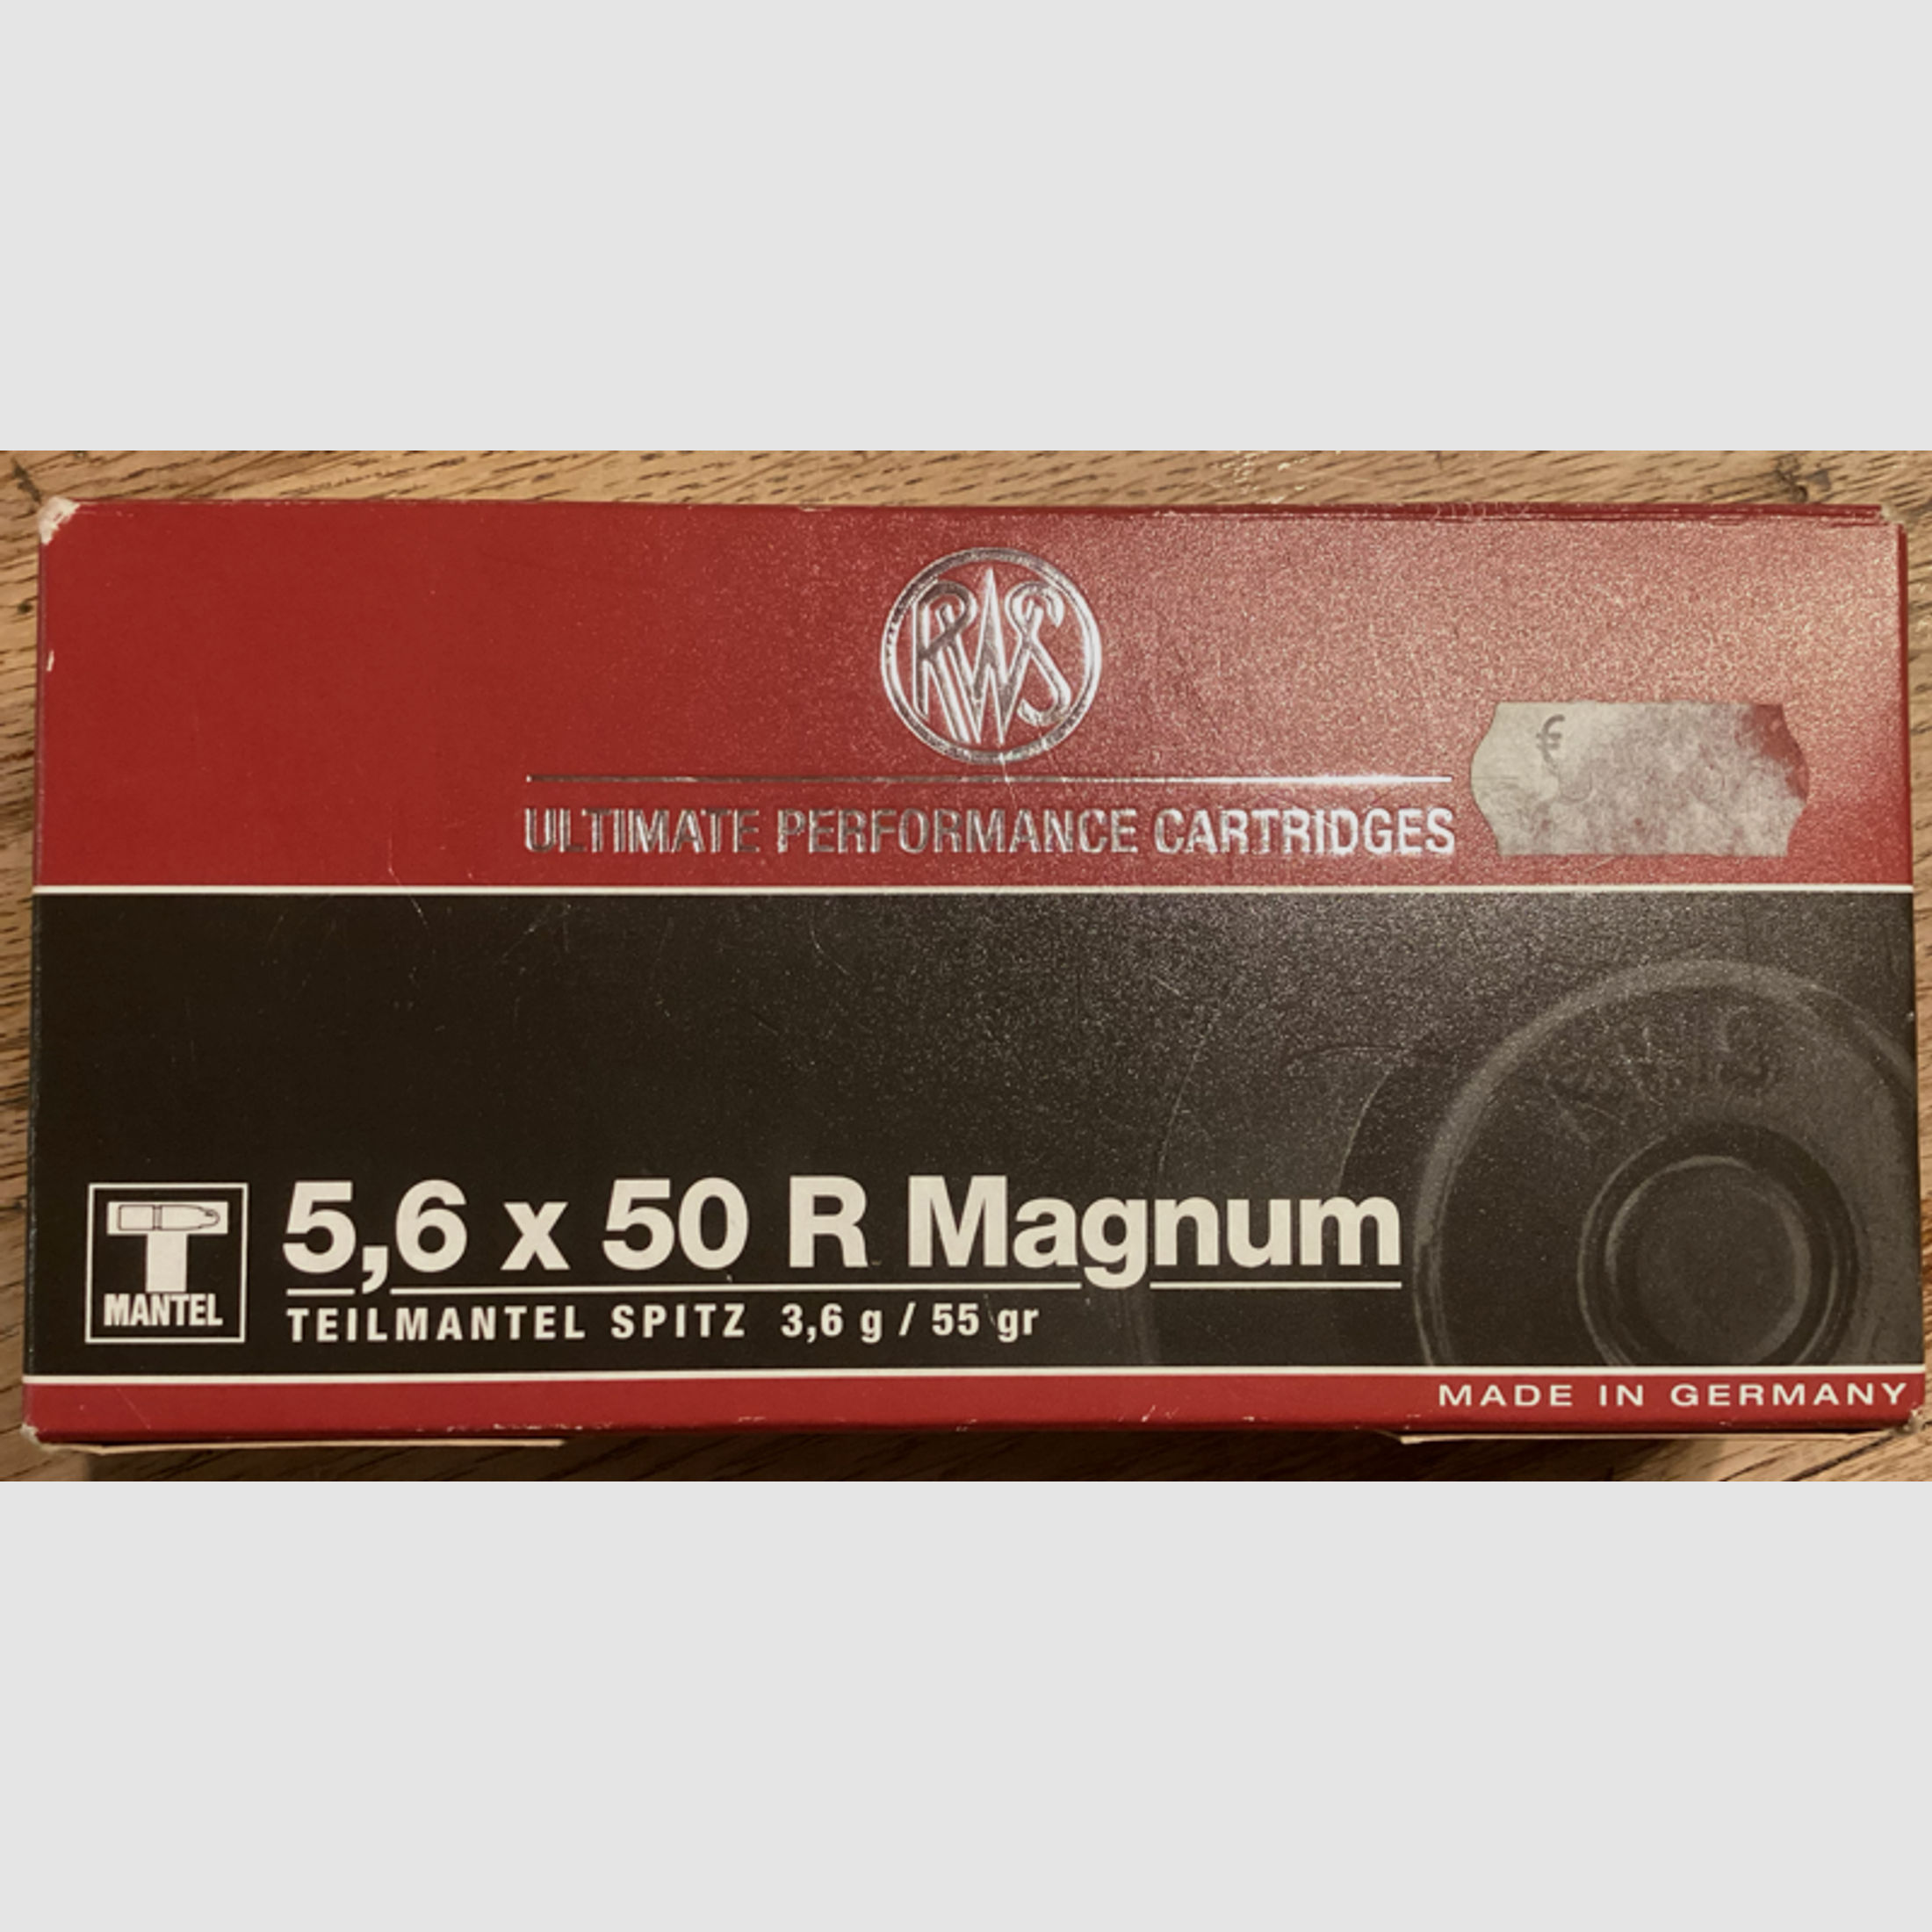 RWS 5,6x50 R Magnum Teilmantel Spitz